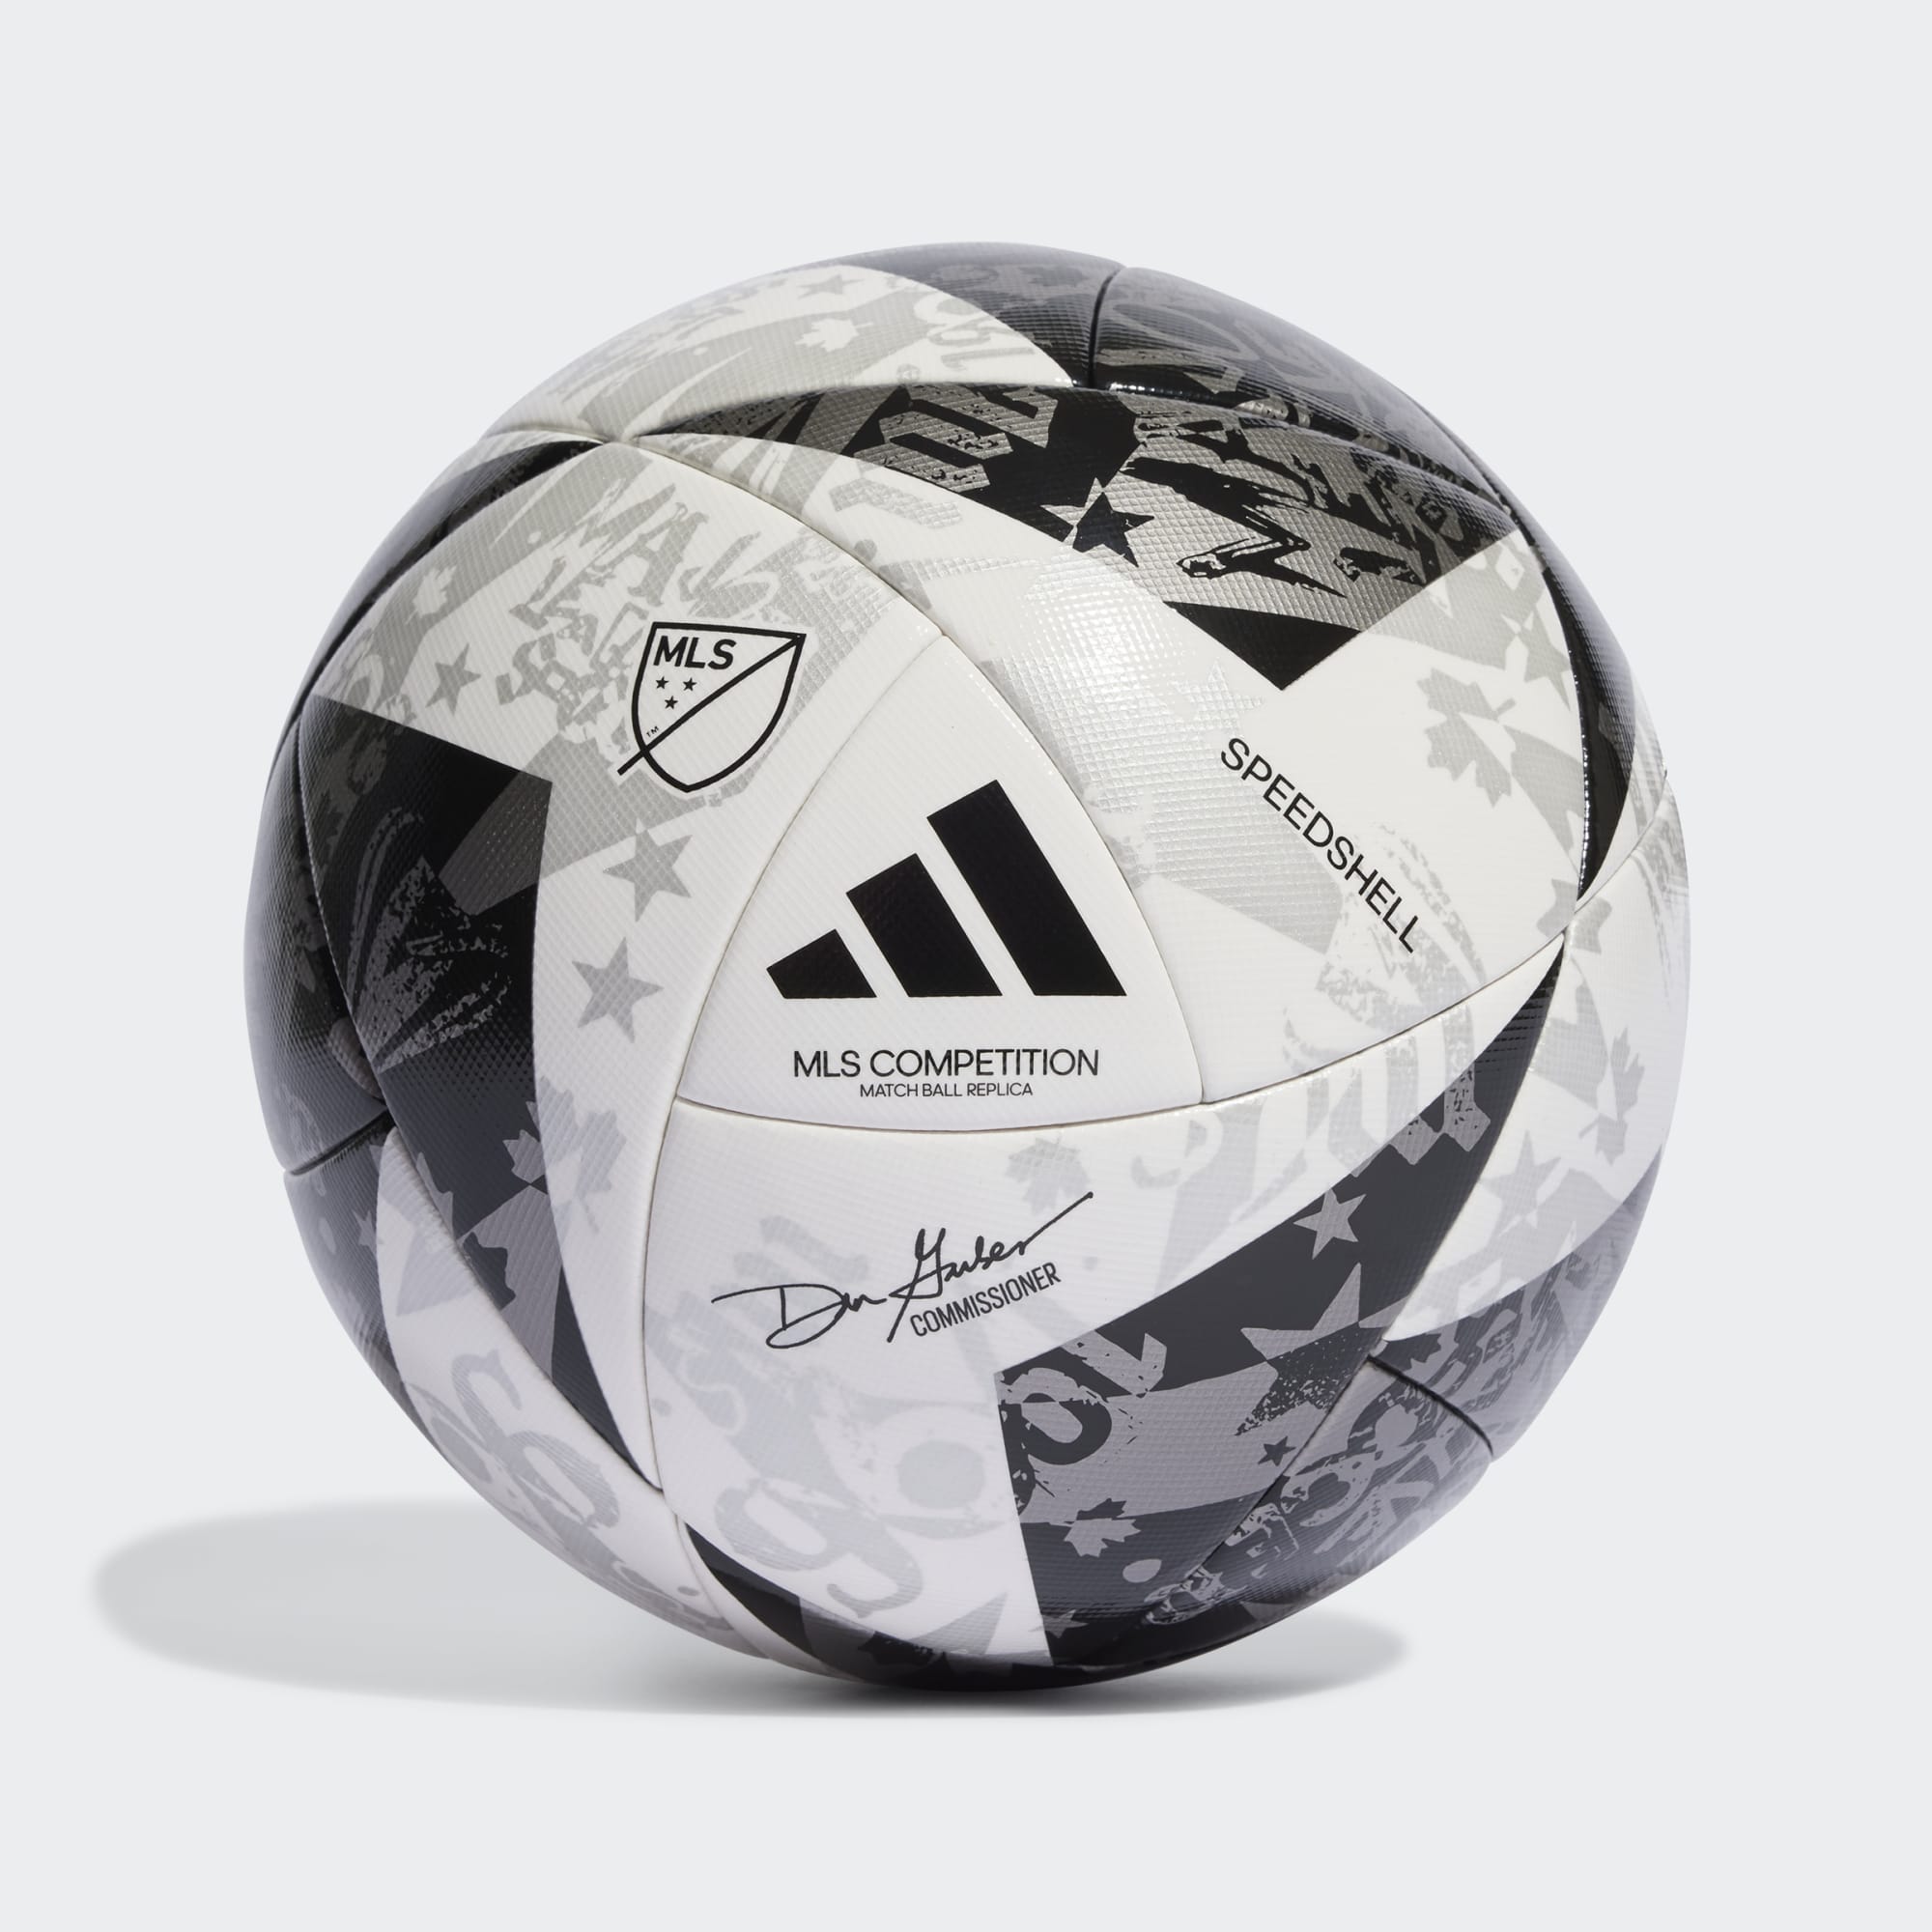 Adidas Brazuca Official Match Ball, Sports Equipment, Sports